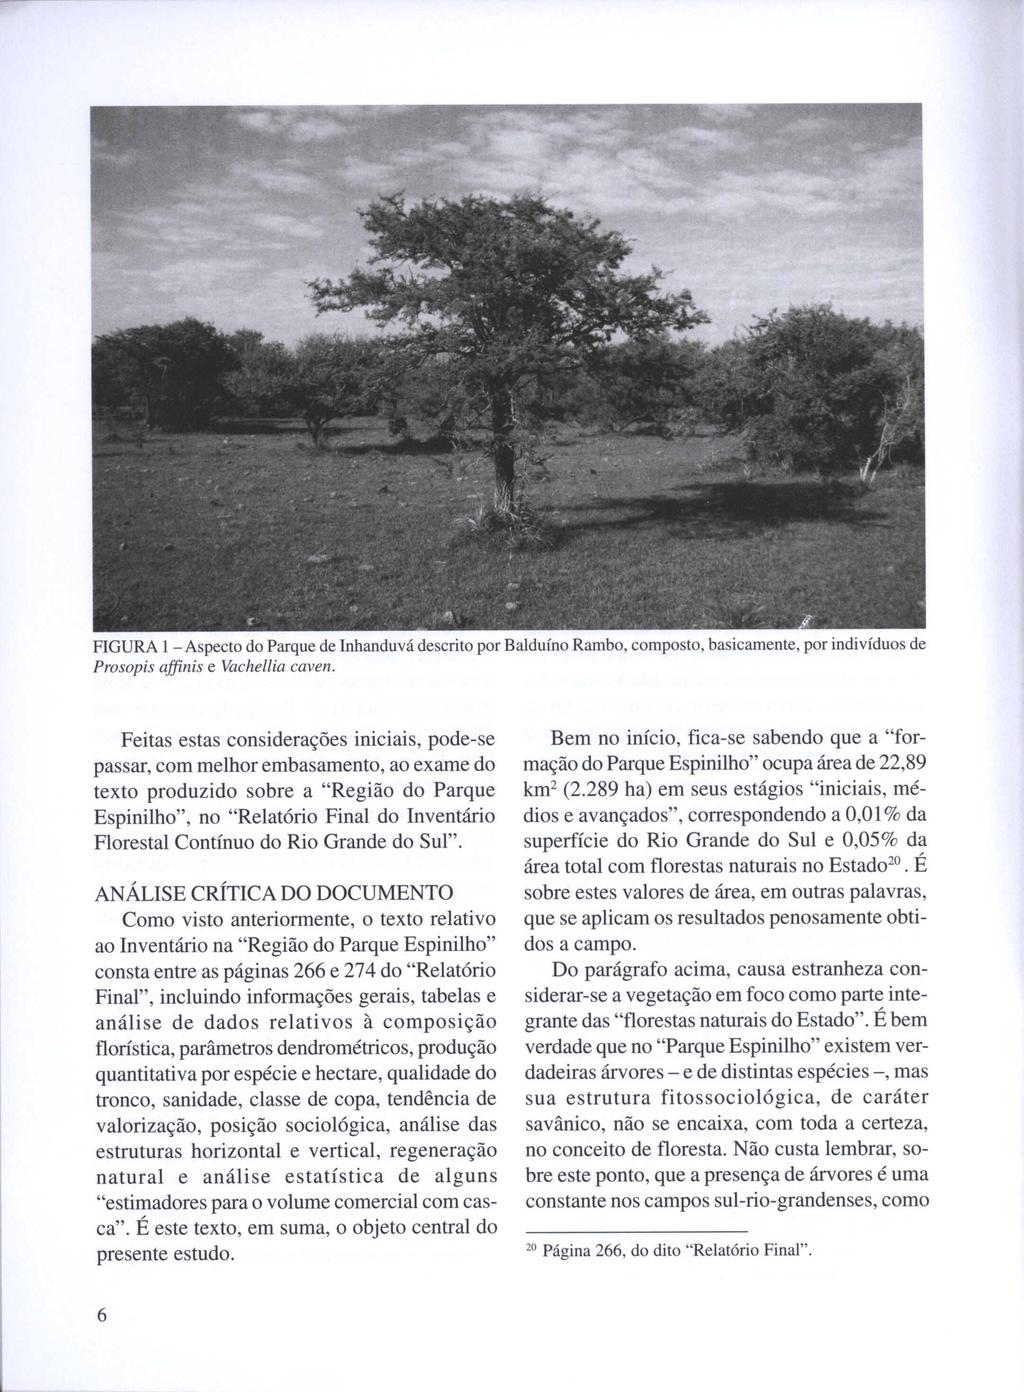 FIGURA 1 - Aspecto do Parque de Inhanduvá descrito por Balduíno Rambo, composto, basicamente, por indivíduos de Prosopis affinis e Vachellia caven.